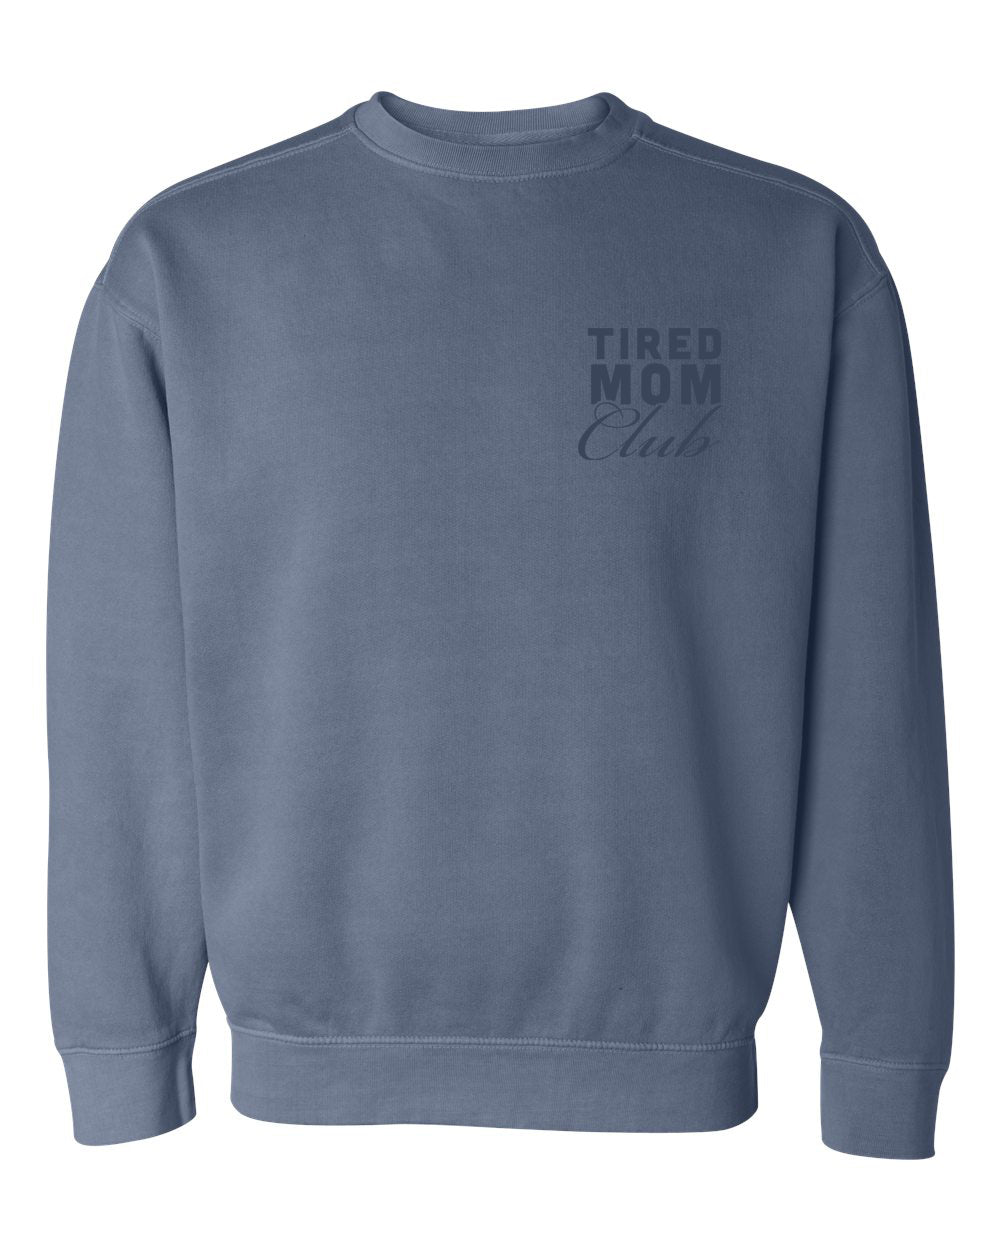 Tired Mom Club Crewneck Sweatshirt - Blue Jean